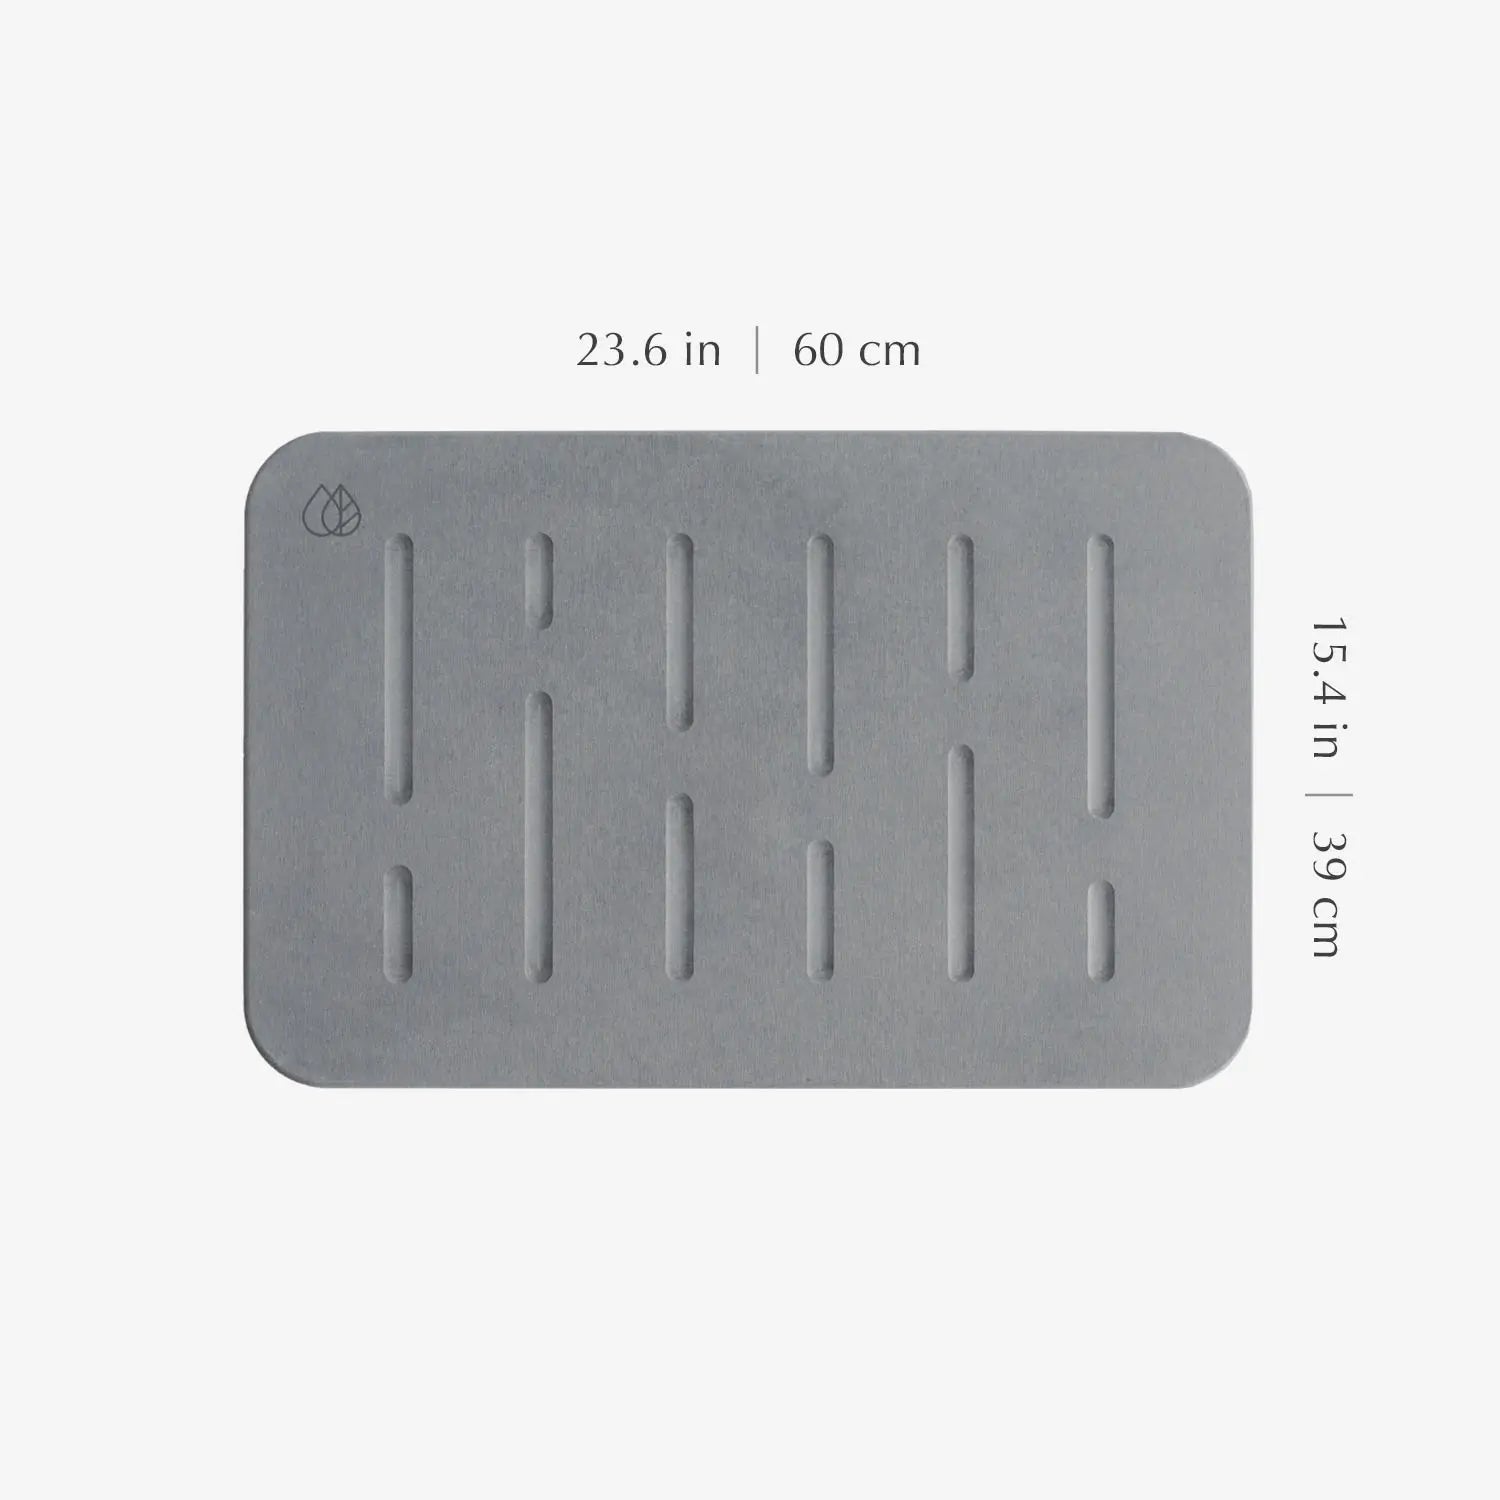 Slate rain bath stone mat dimensions 23.6 by 15.4 inches (60cm by 39 cm)